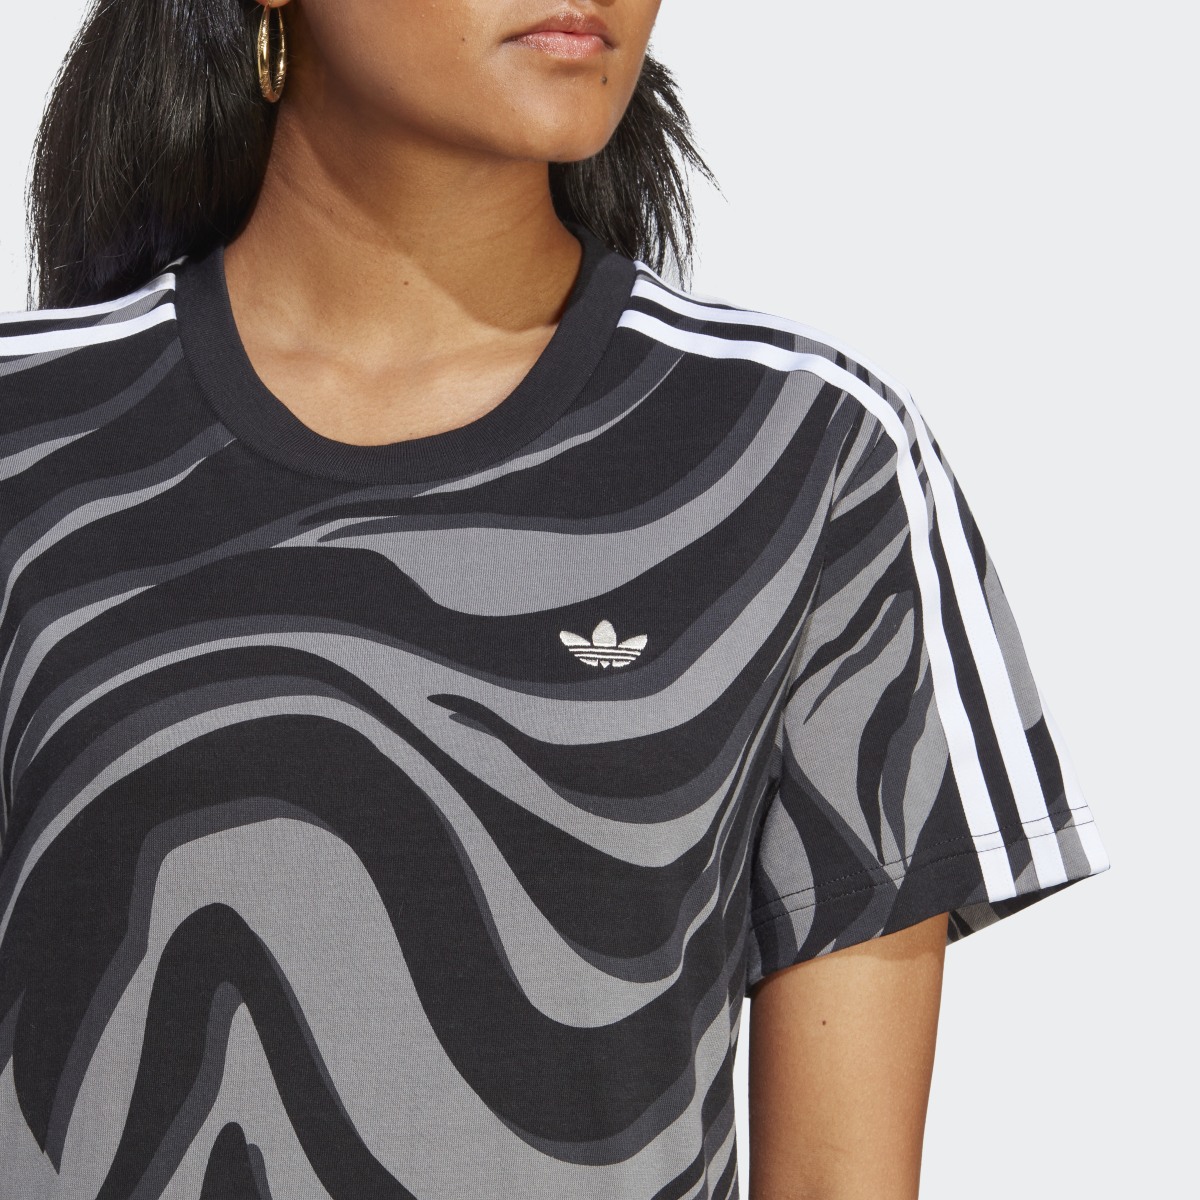 Adidas Abstract Allover Animal Print T-Shirt. 6